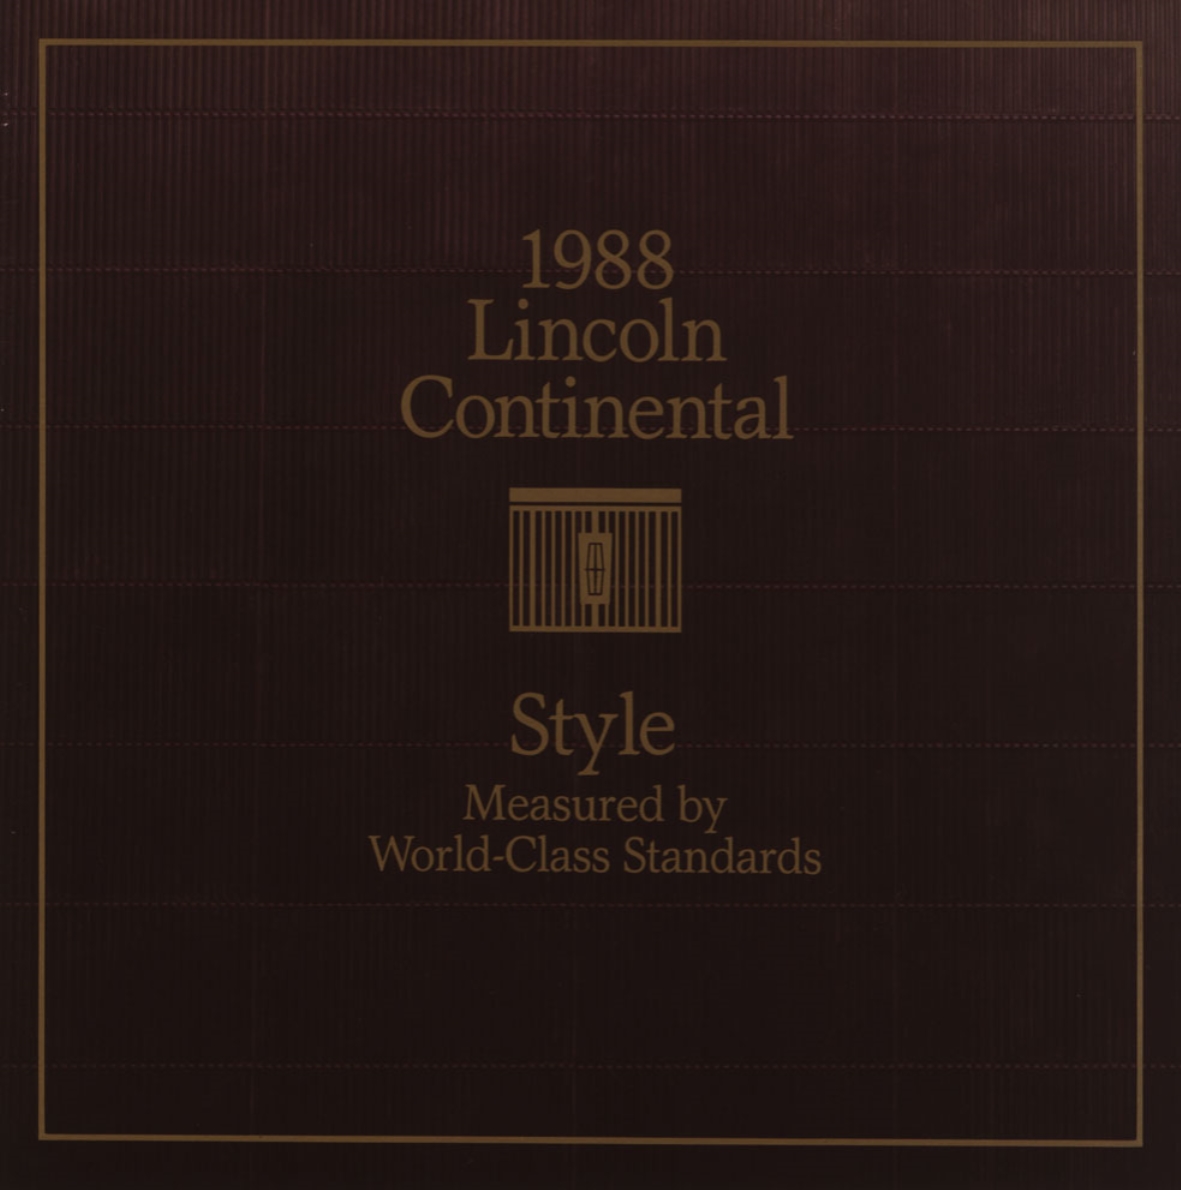 n_1988 Lincoln Continental Portfolio-03.jpg